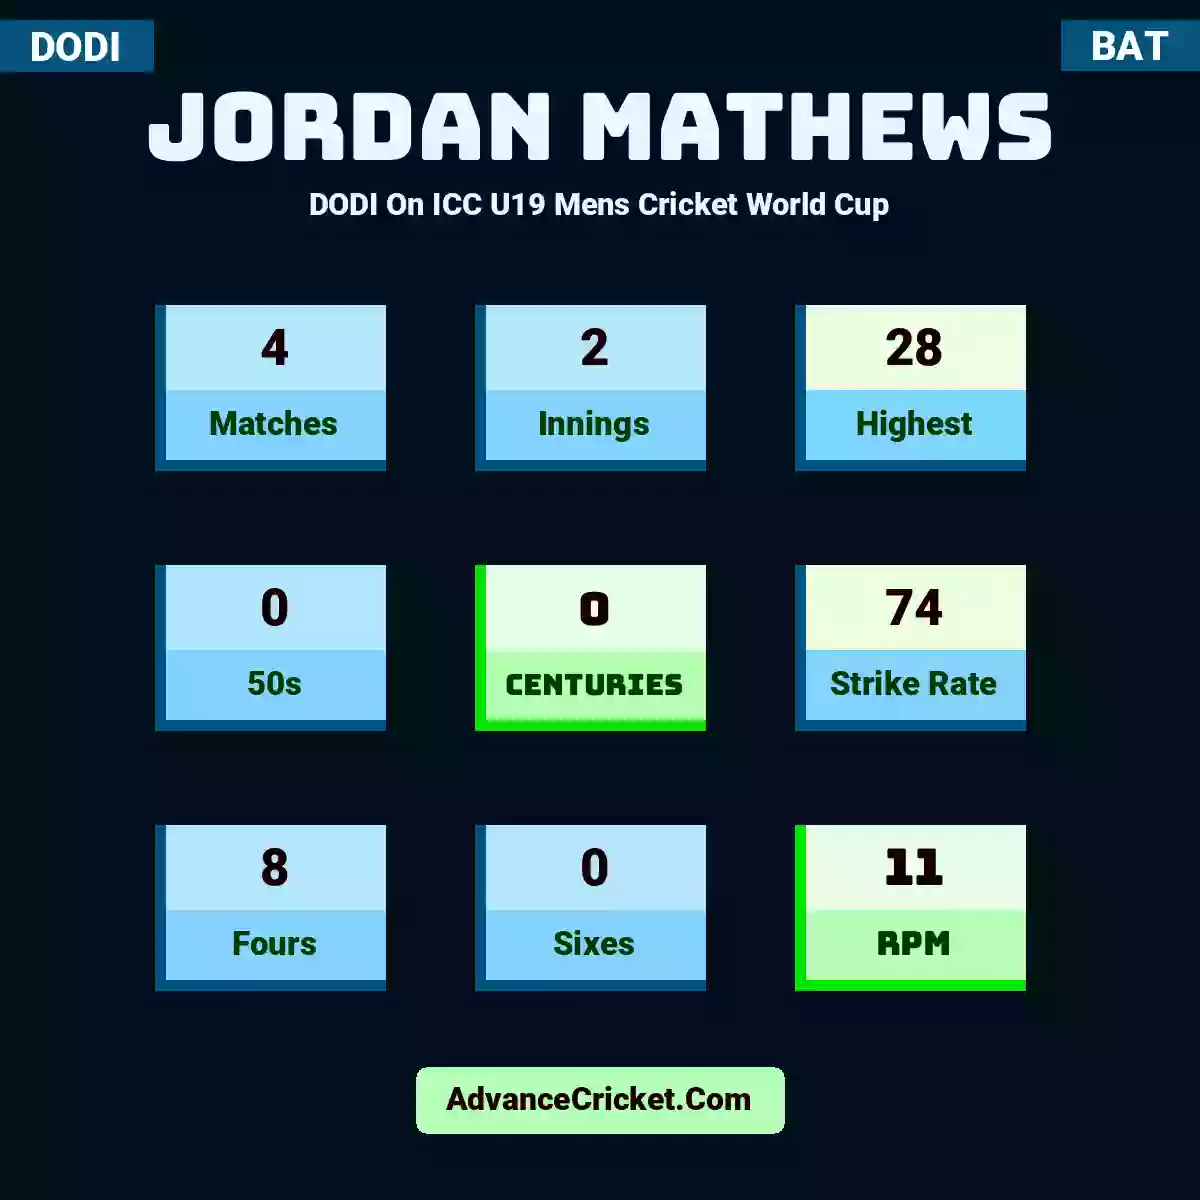 Jordan Mathews DODI  On ICC U19 Mens Cricket World Cup, Jordan Mathews played 4 matches, scored 28 runs as highest, 0 half-centuries, and 0 centuries, with a strike rate of 74. J.Mathews hit 8 fours and 0 sixes, with an RPM of 11.